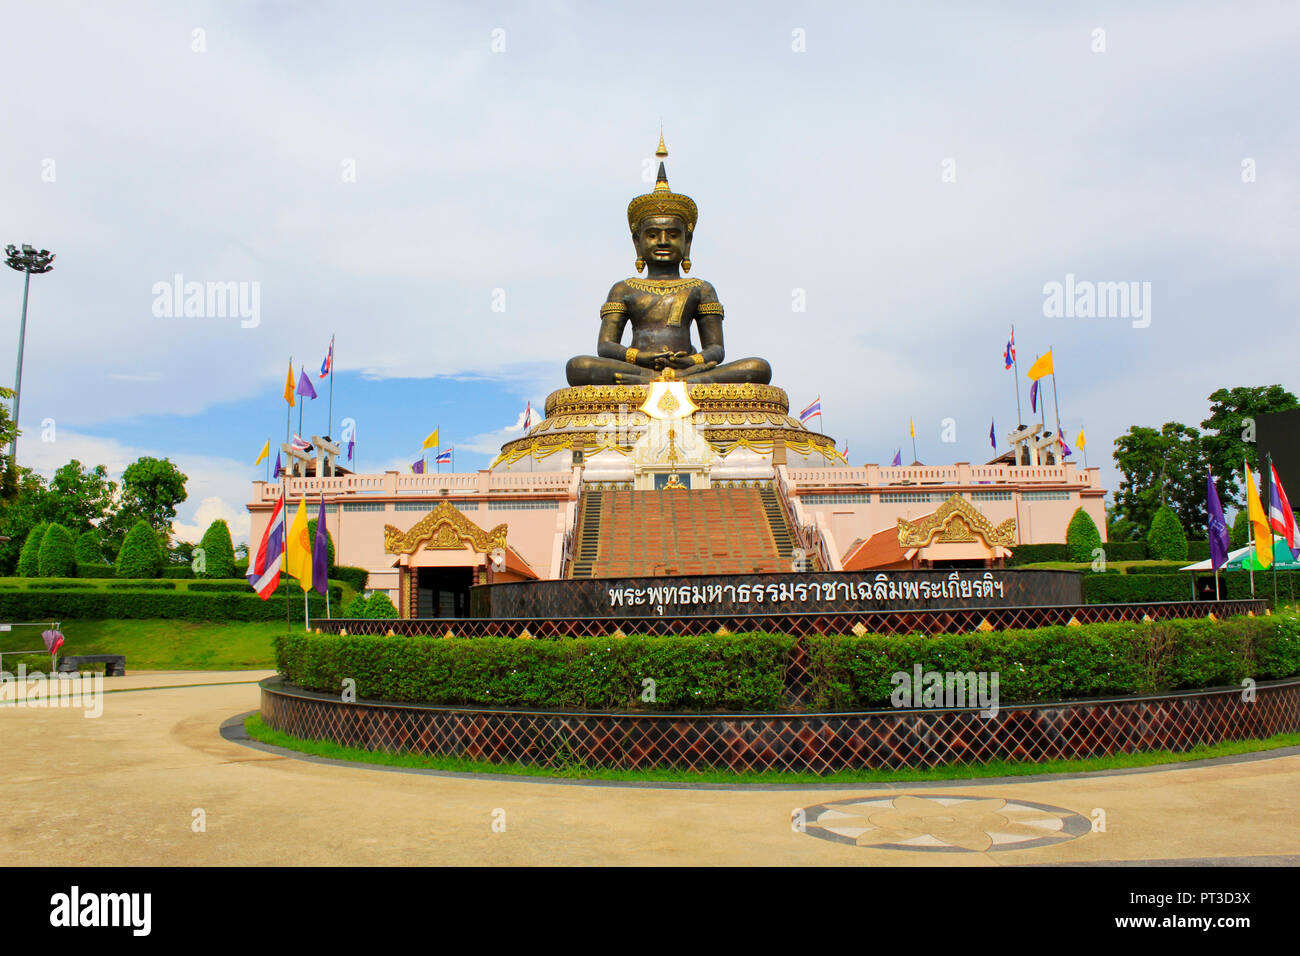 Vista de la entrada principal de Phra Buda Maha Dhammraja, Phetchabun, Tailandia. Foto de stock